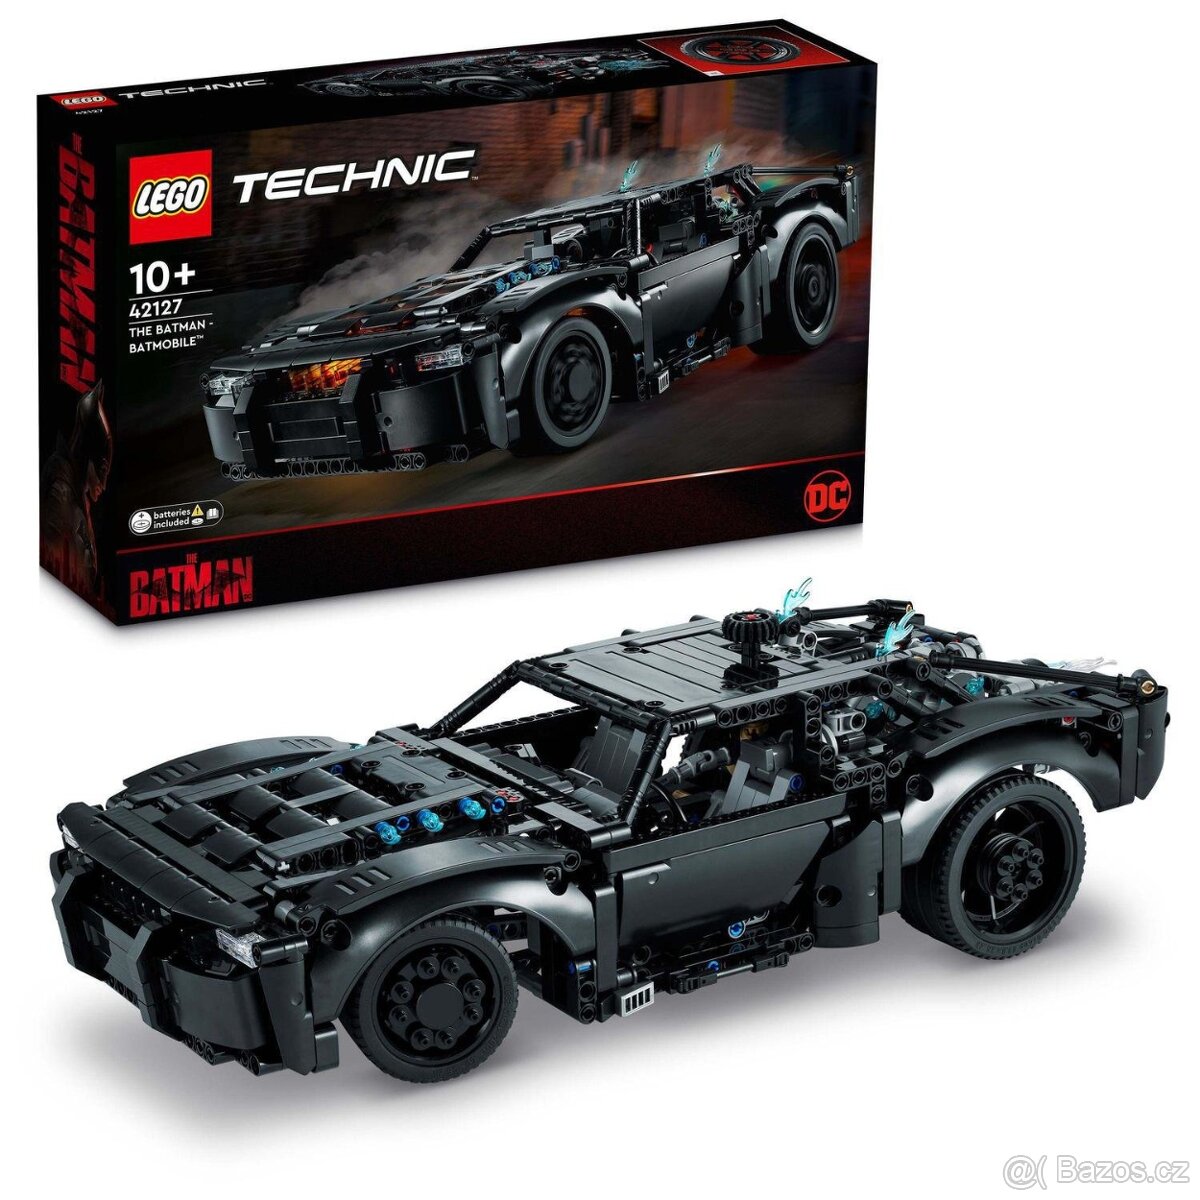 LEGO technic 42127 BATMAN - BATMAN